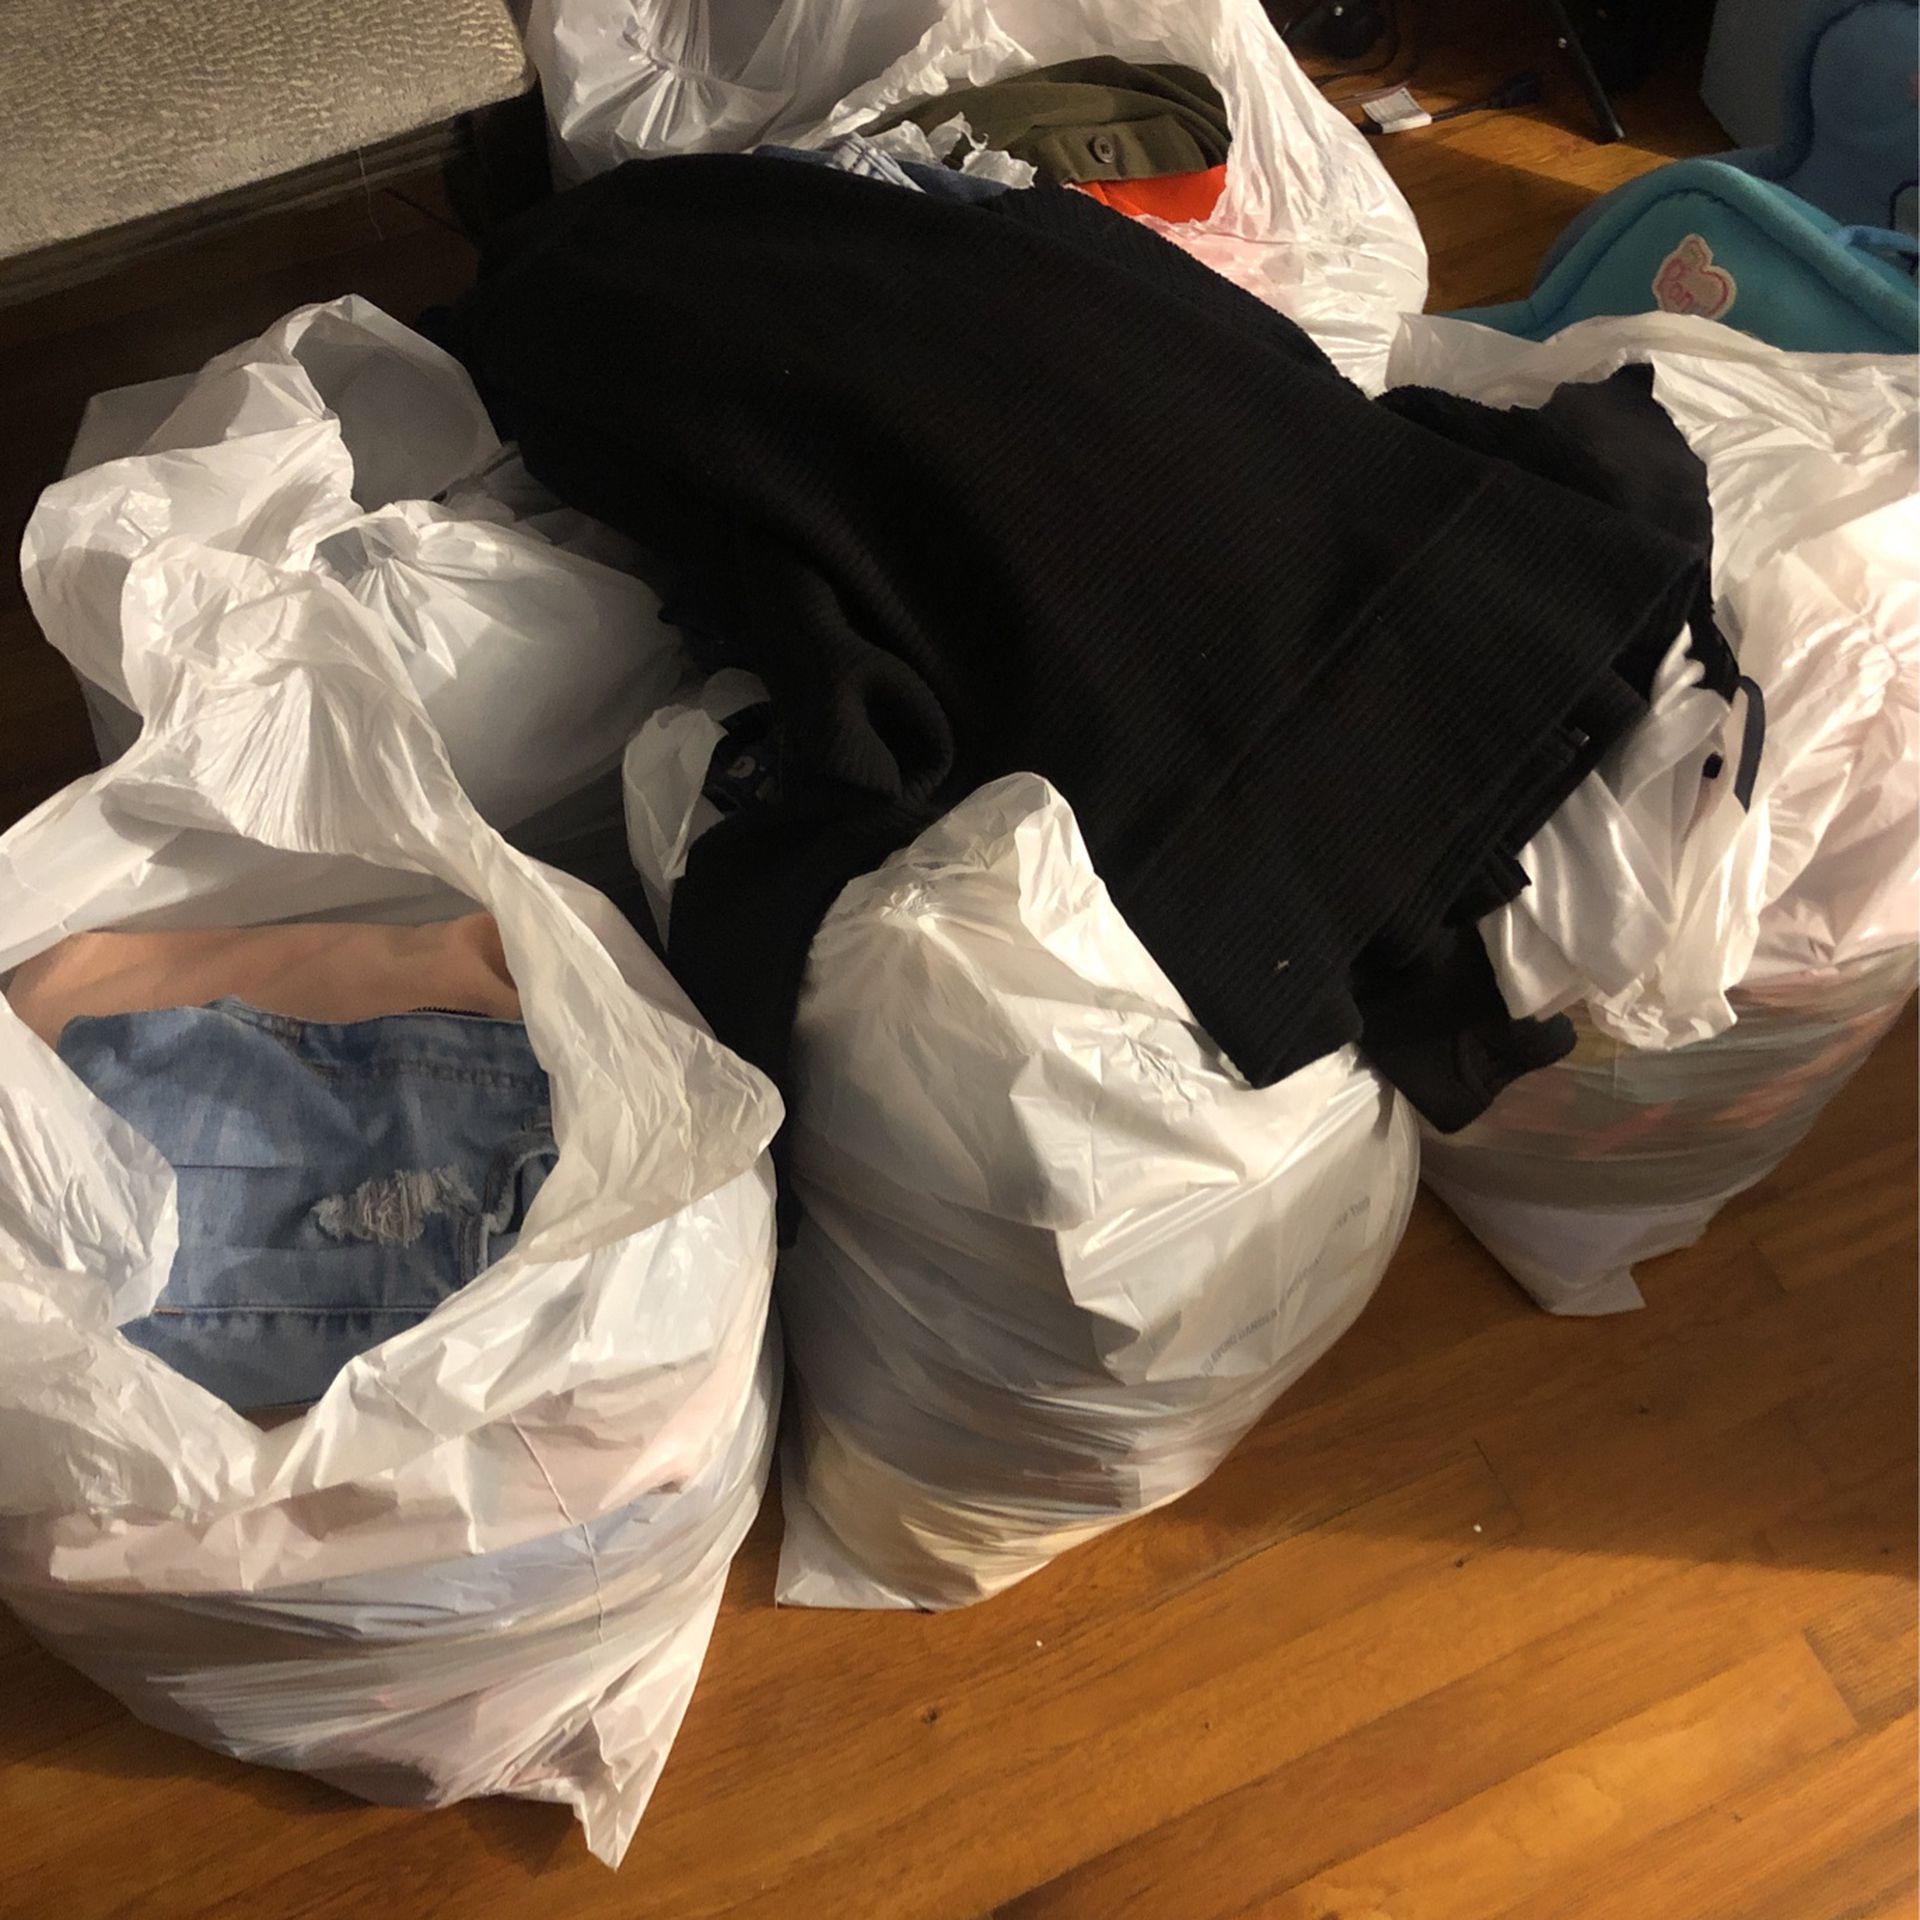 6 Bags Of Junior Clothes-